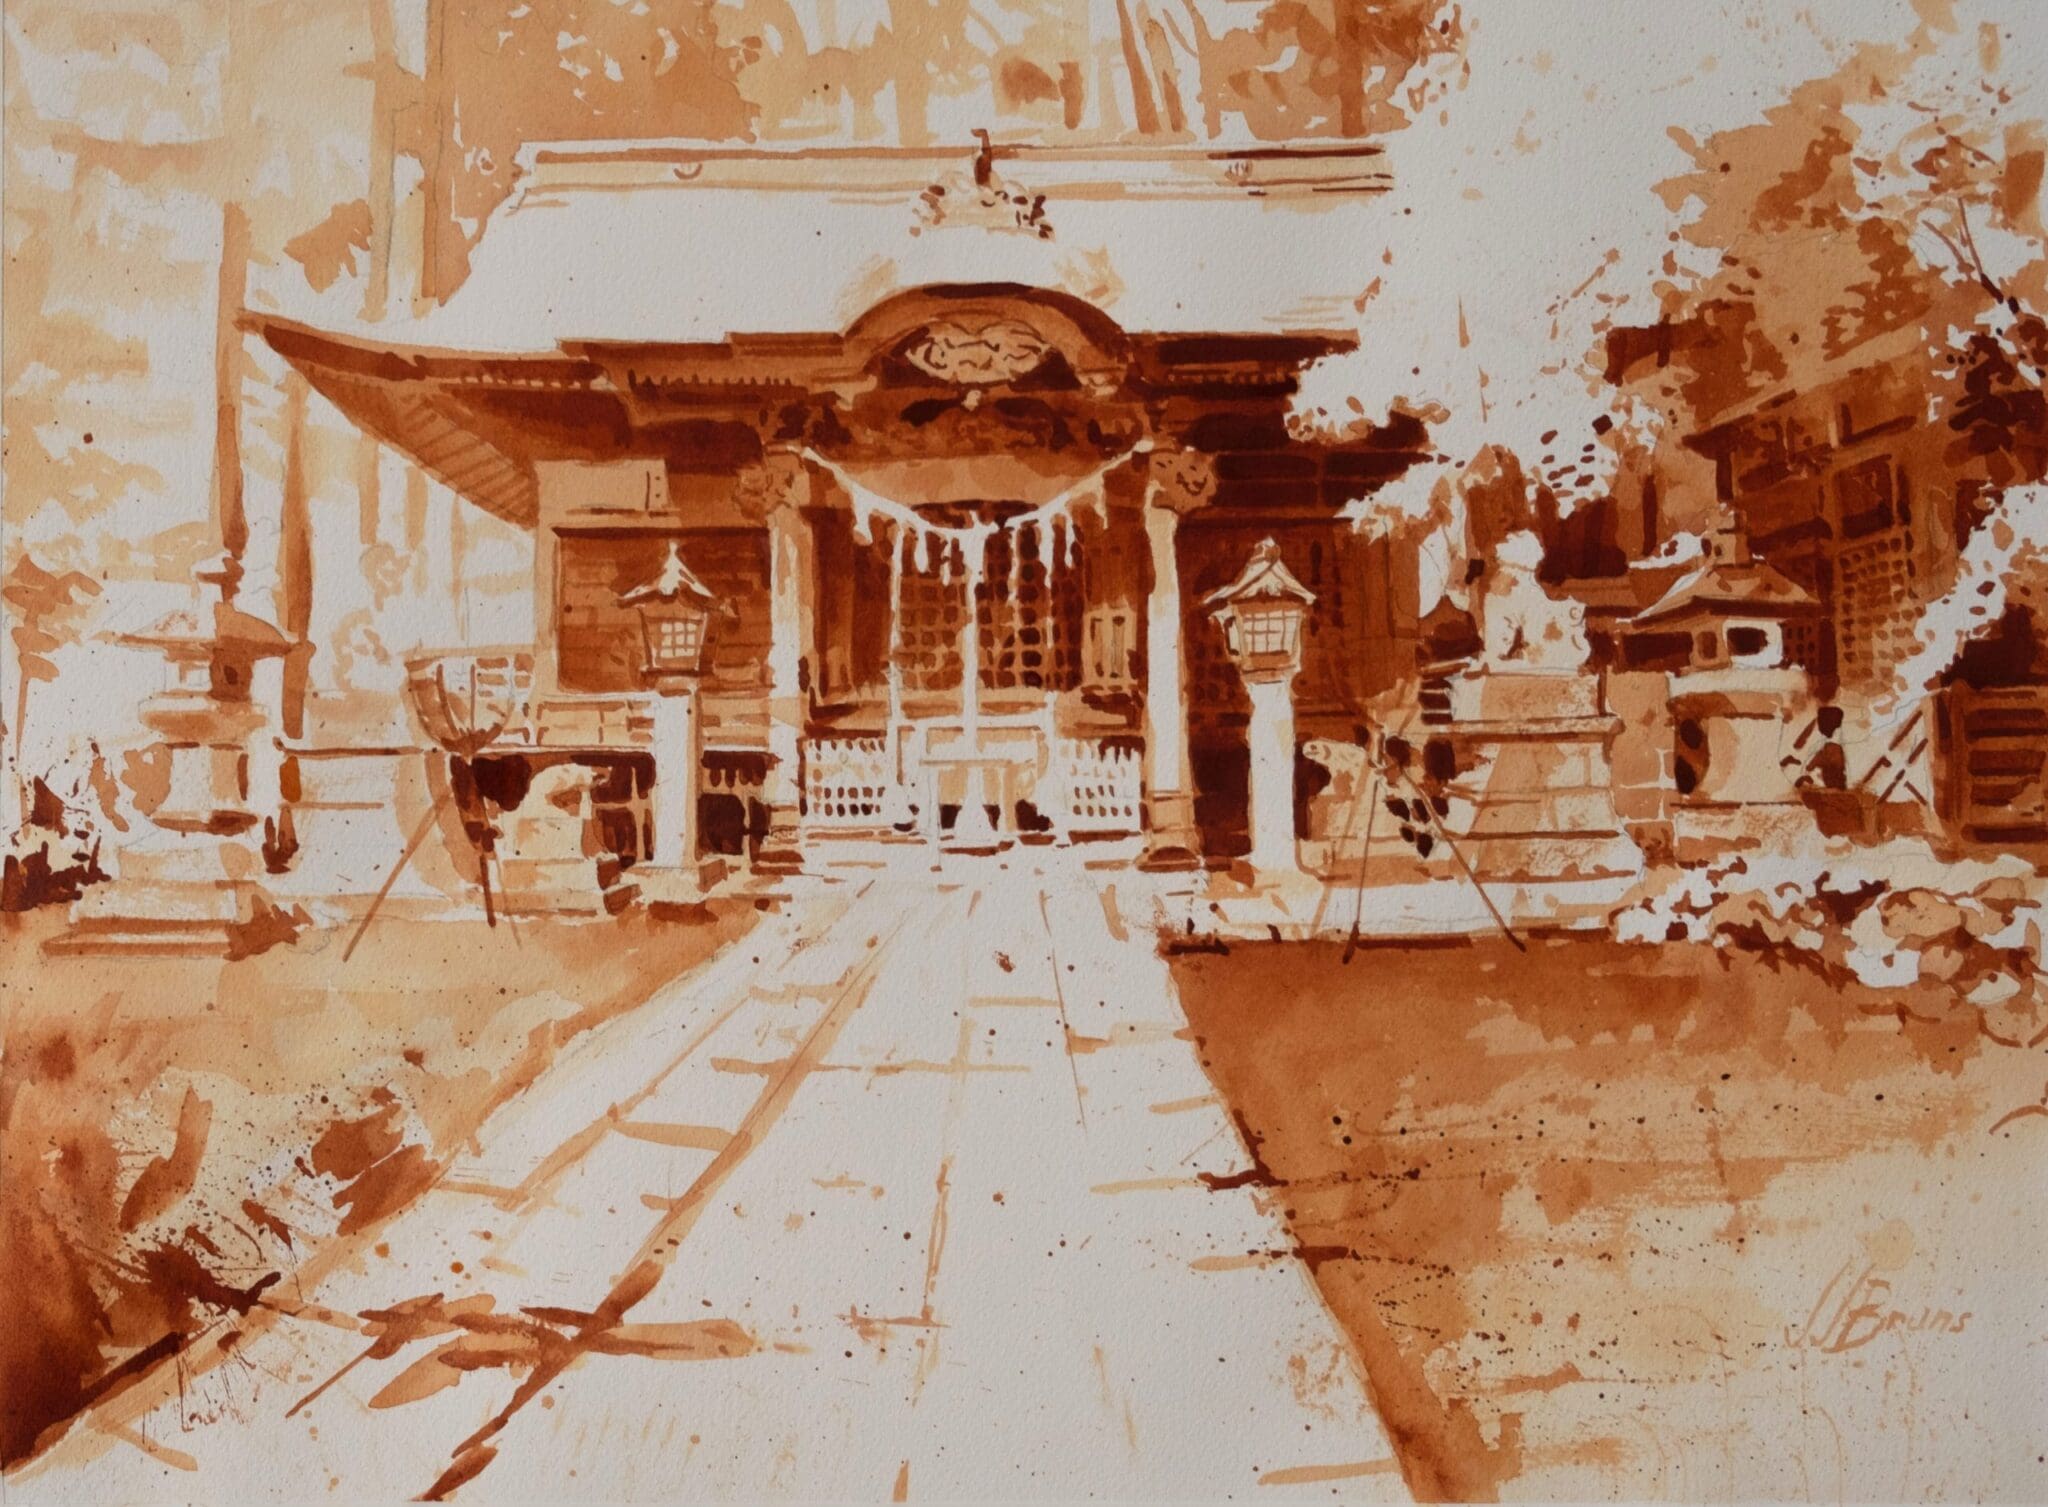 Kattamine Shrine, ink on paper, 14.5x19.5in, 01-23